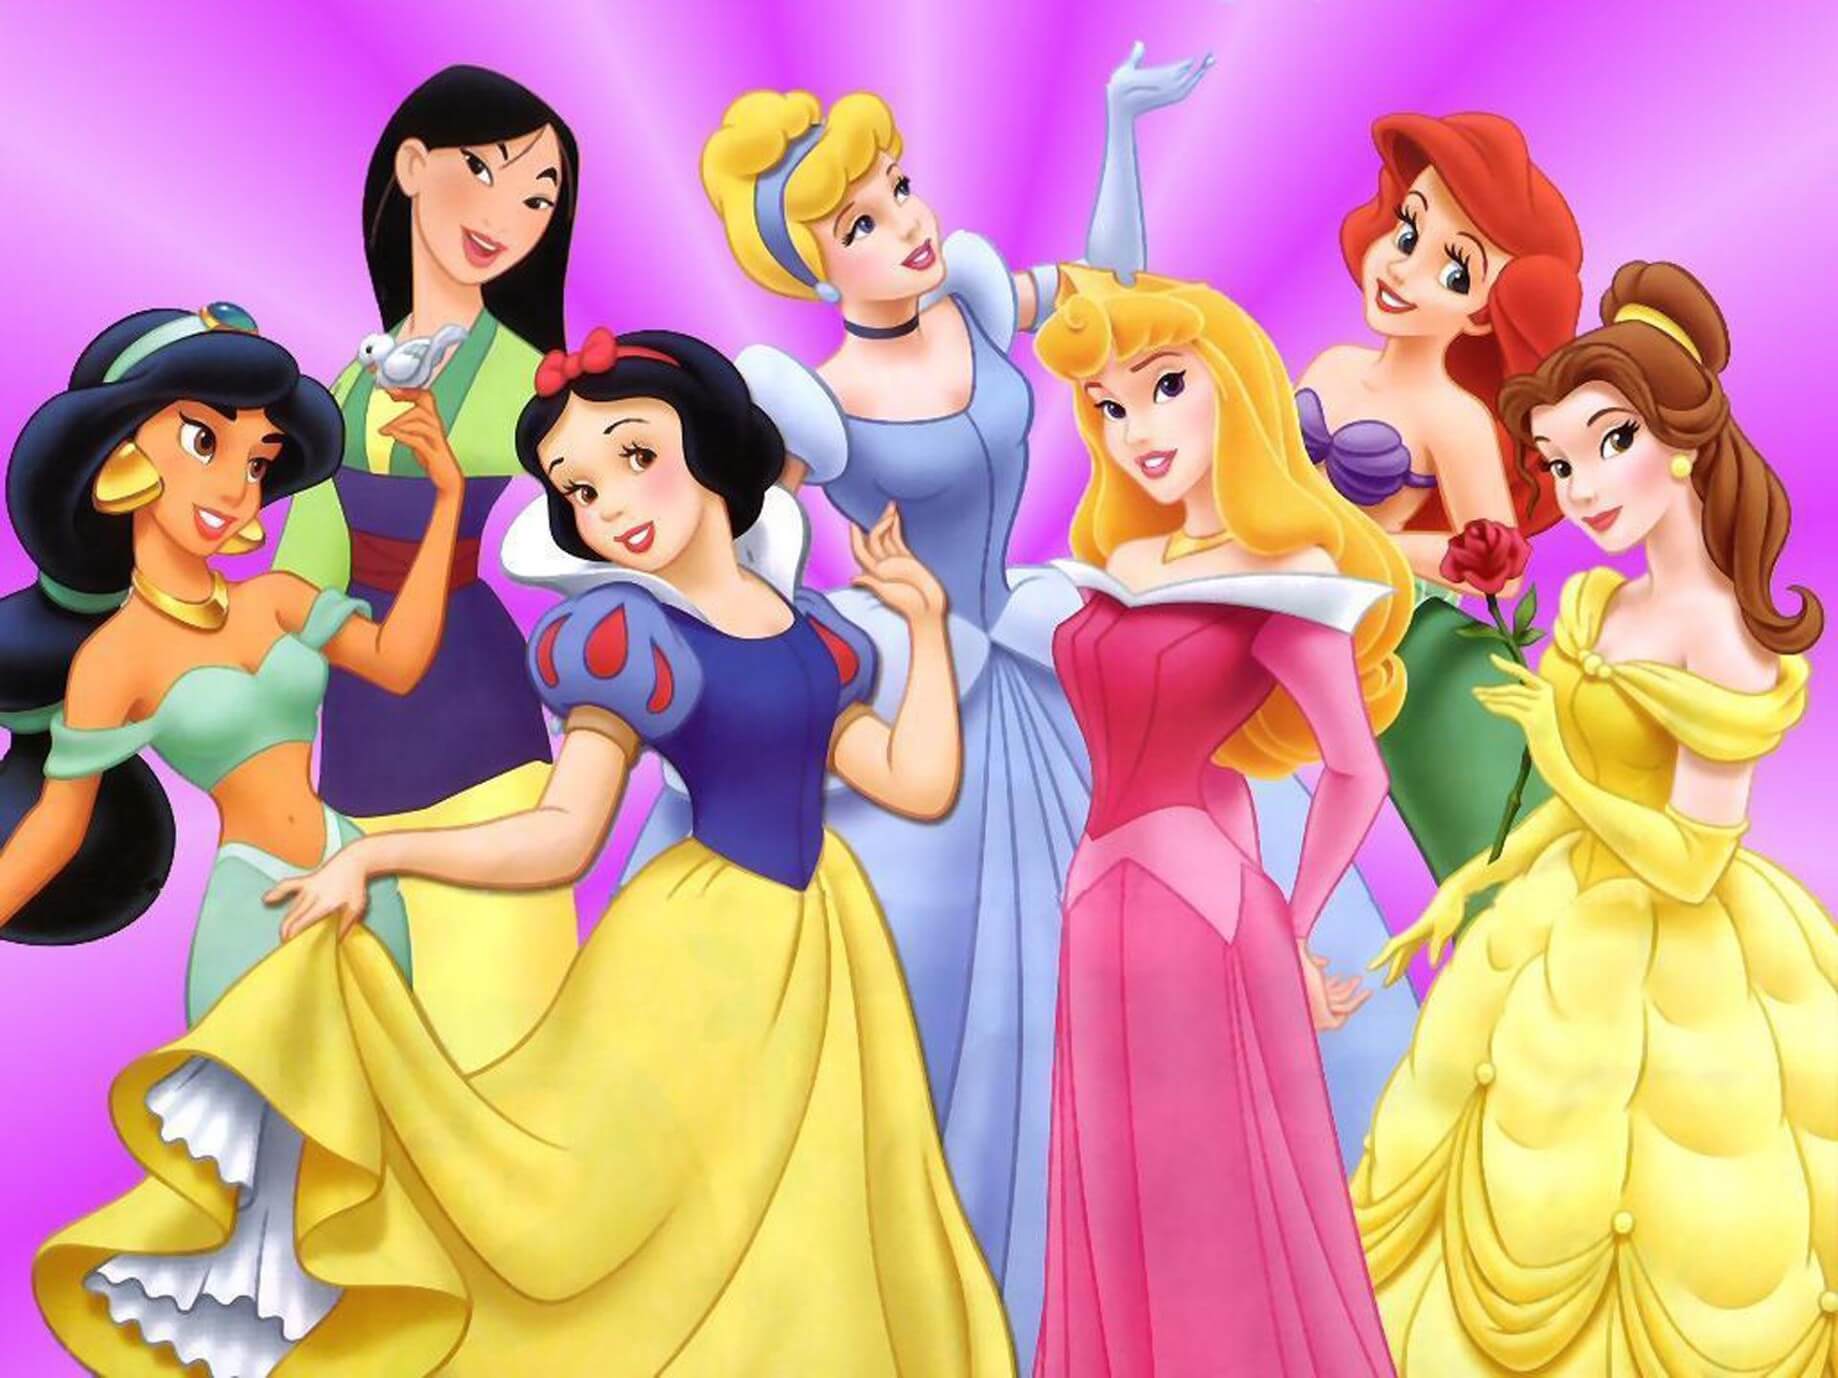 Rank the Disney Princesses from most feminine to least feminine